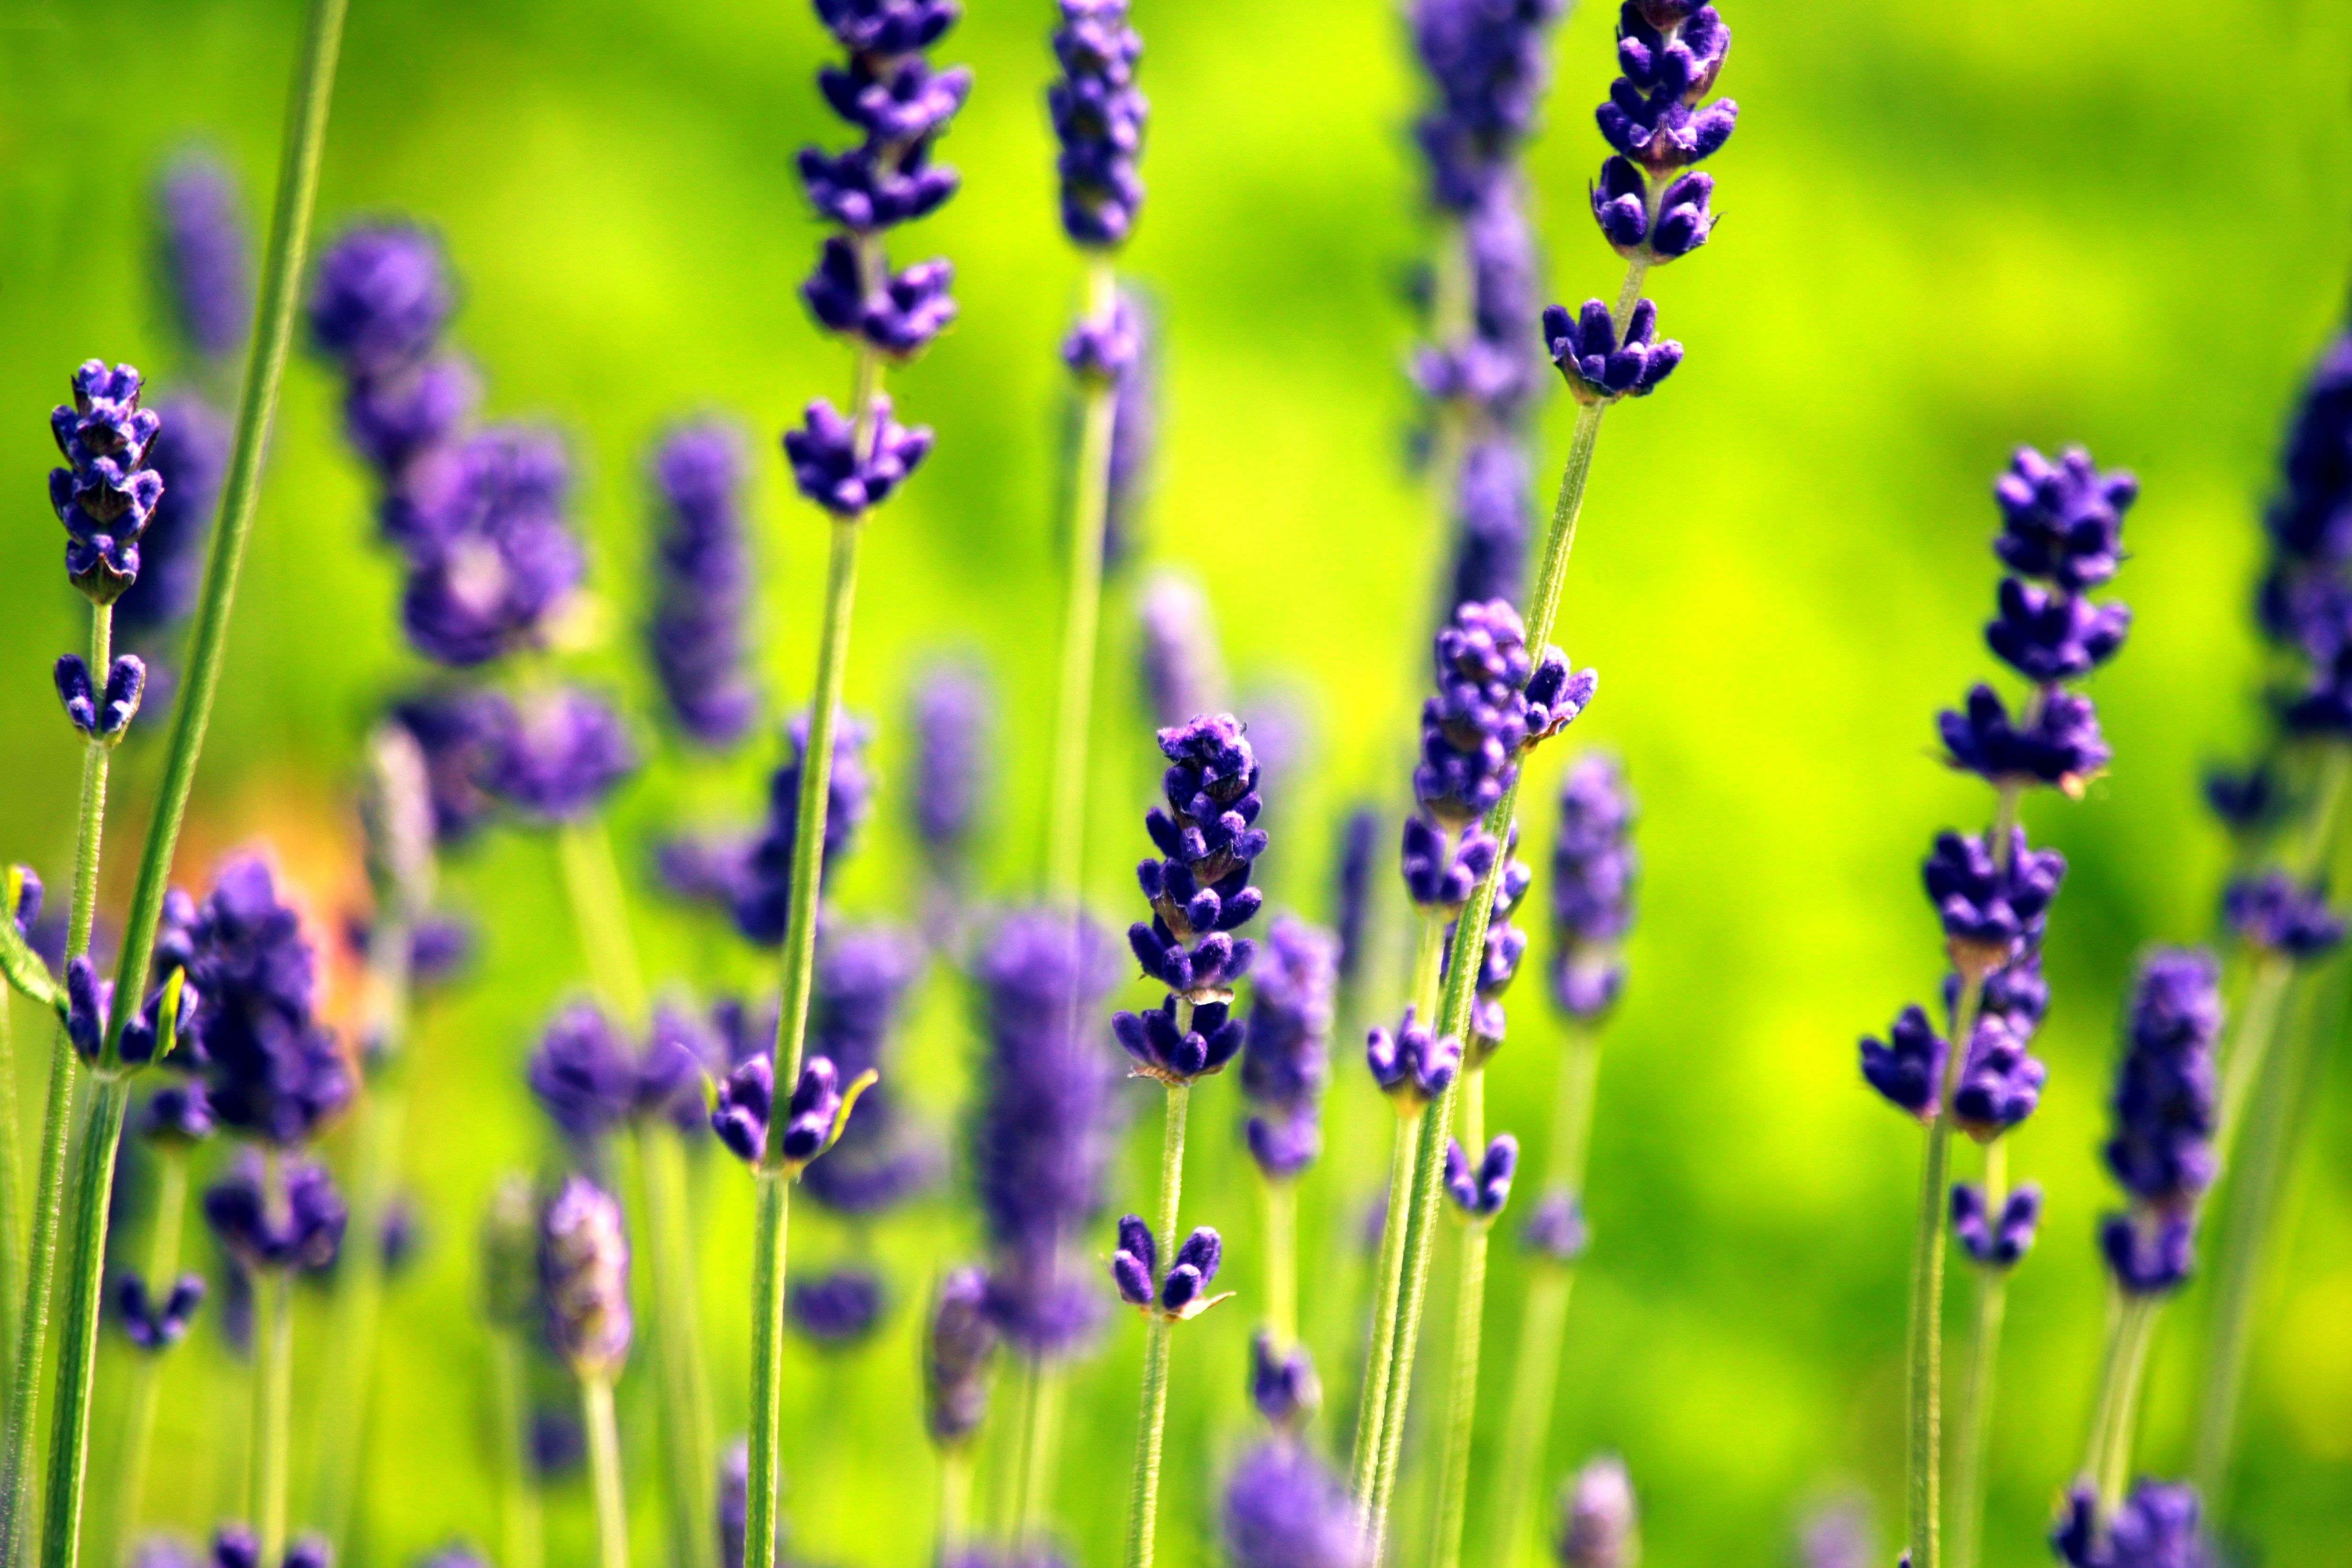 General 5000x3333 plants macro flowers purple flowers nature green background outdoors